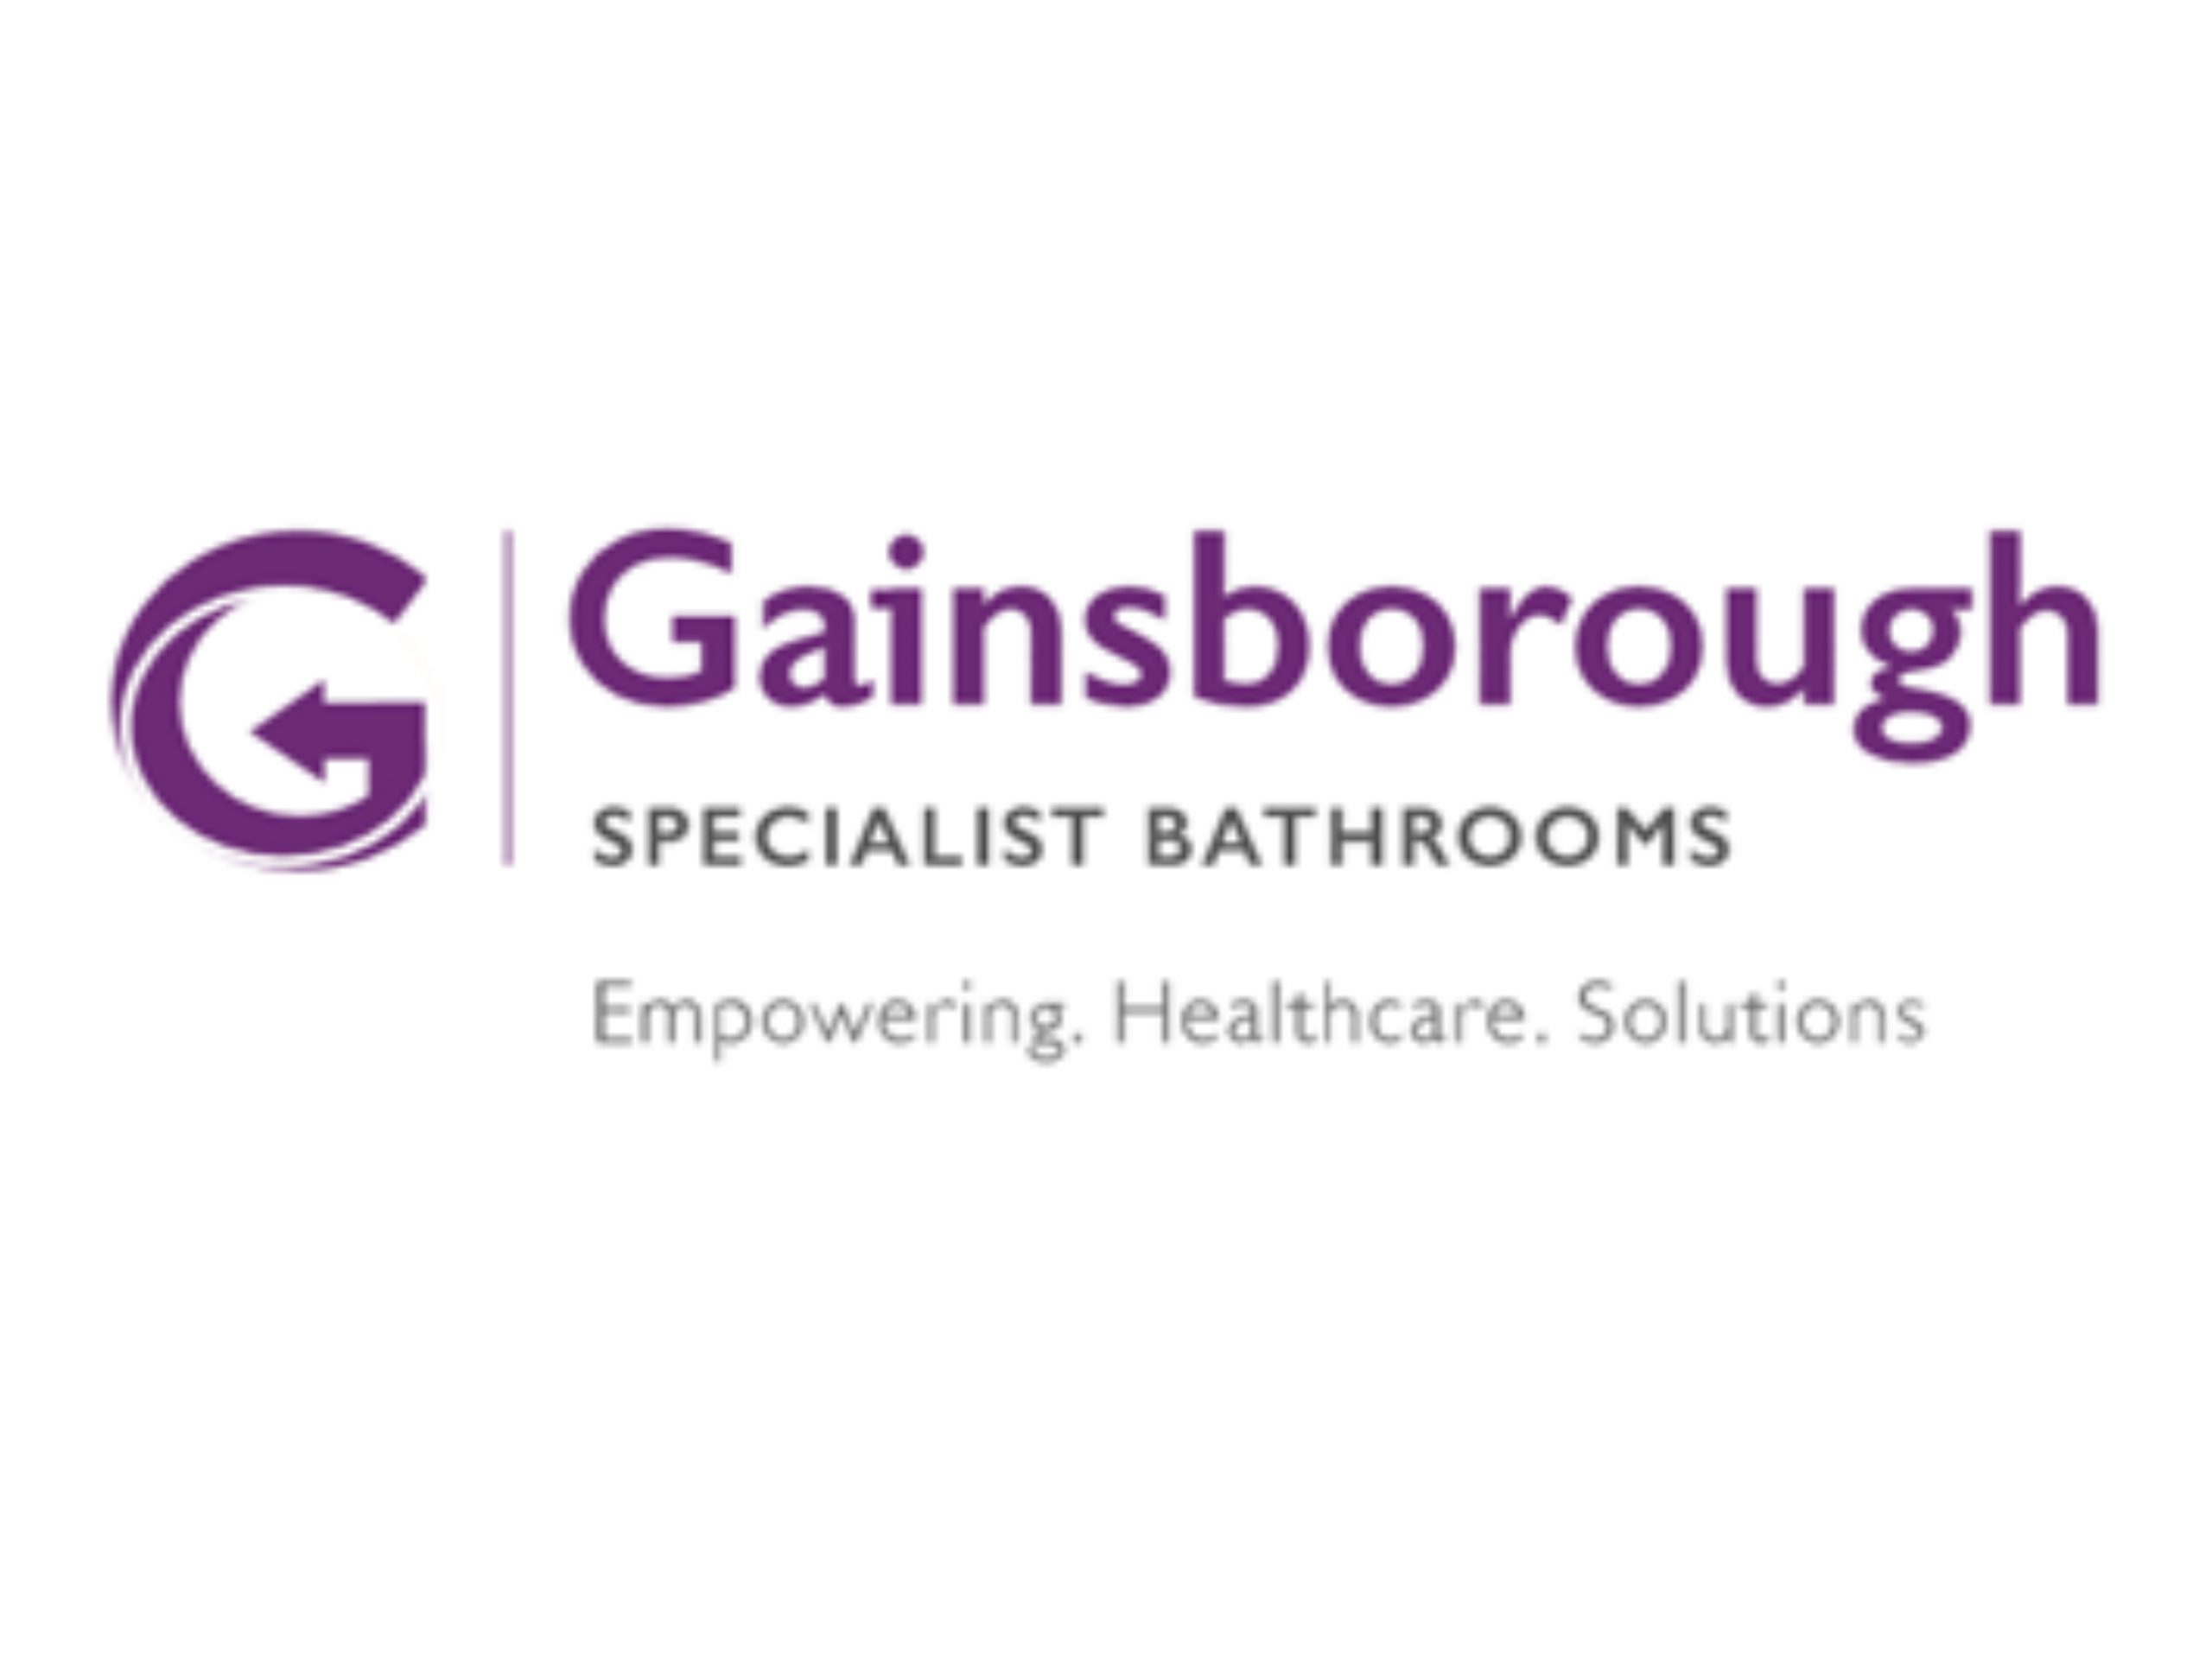 Gainsborough completes Gentona bath installations at next generation, boutique Potters Grange Care Home